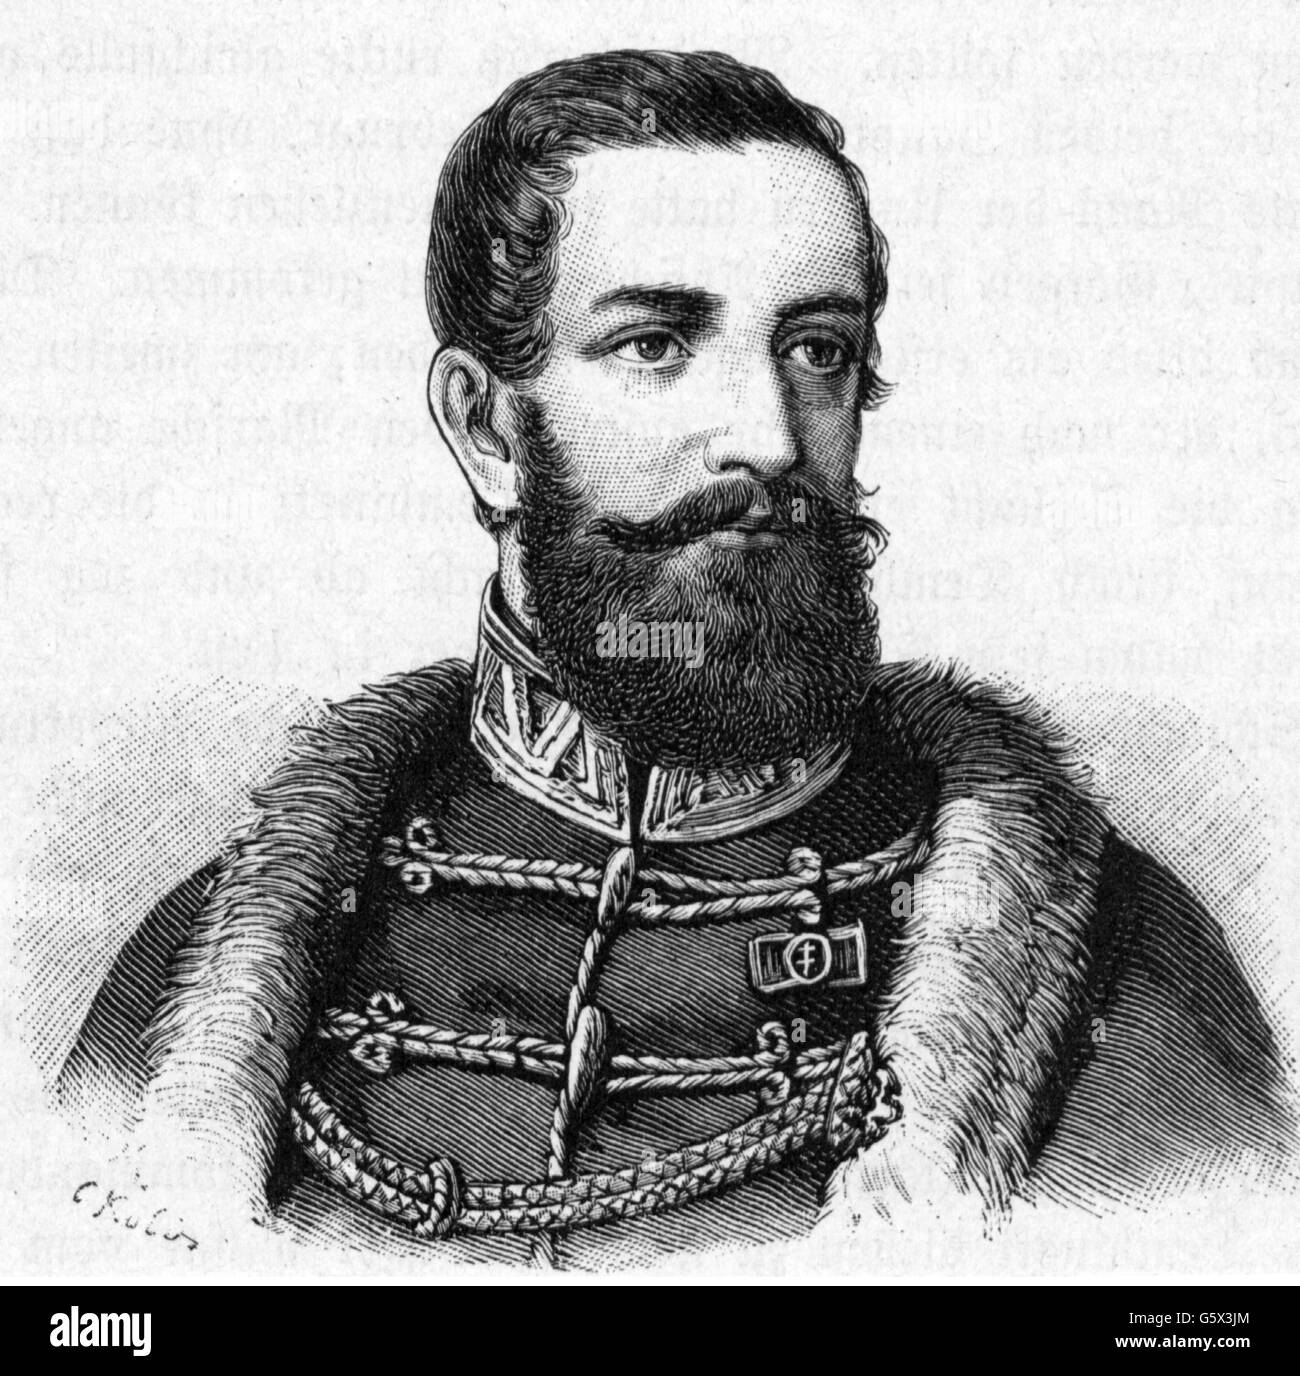 Klapka, Gyoergy, 7.4.1820 - 17.5.1892, Hungarian general, portrait, wood engraving, 19th century, Stock Photo